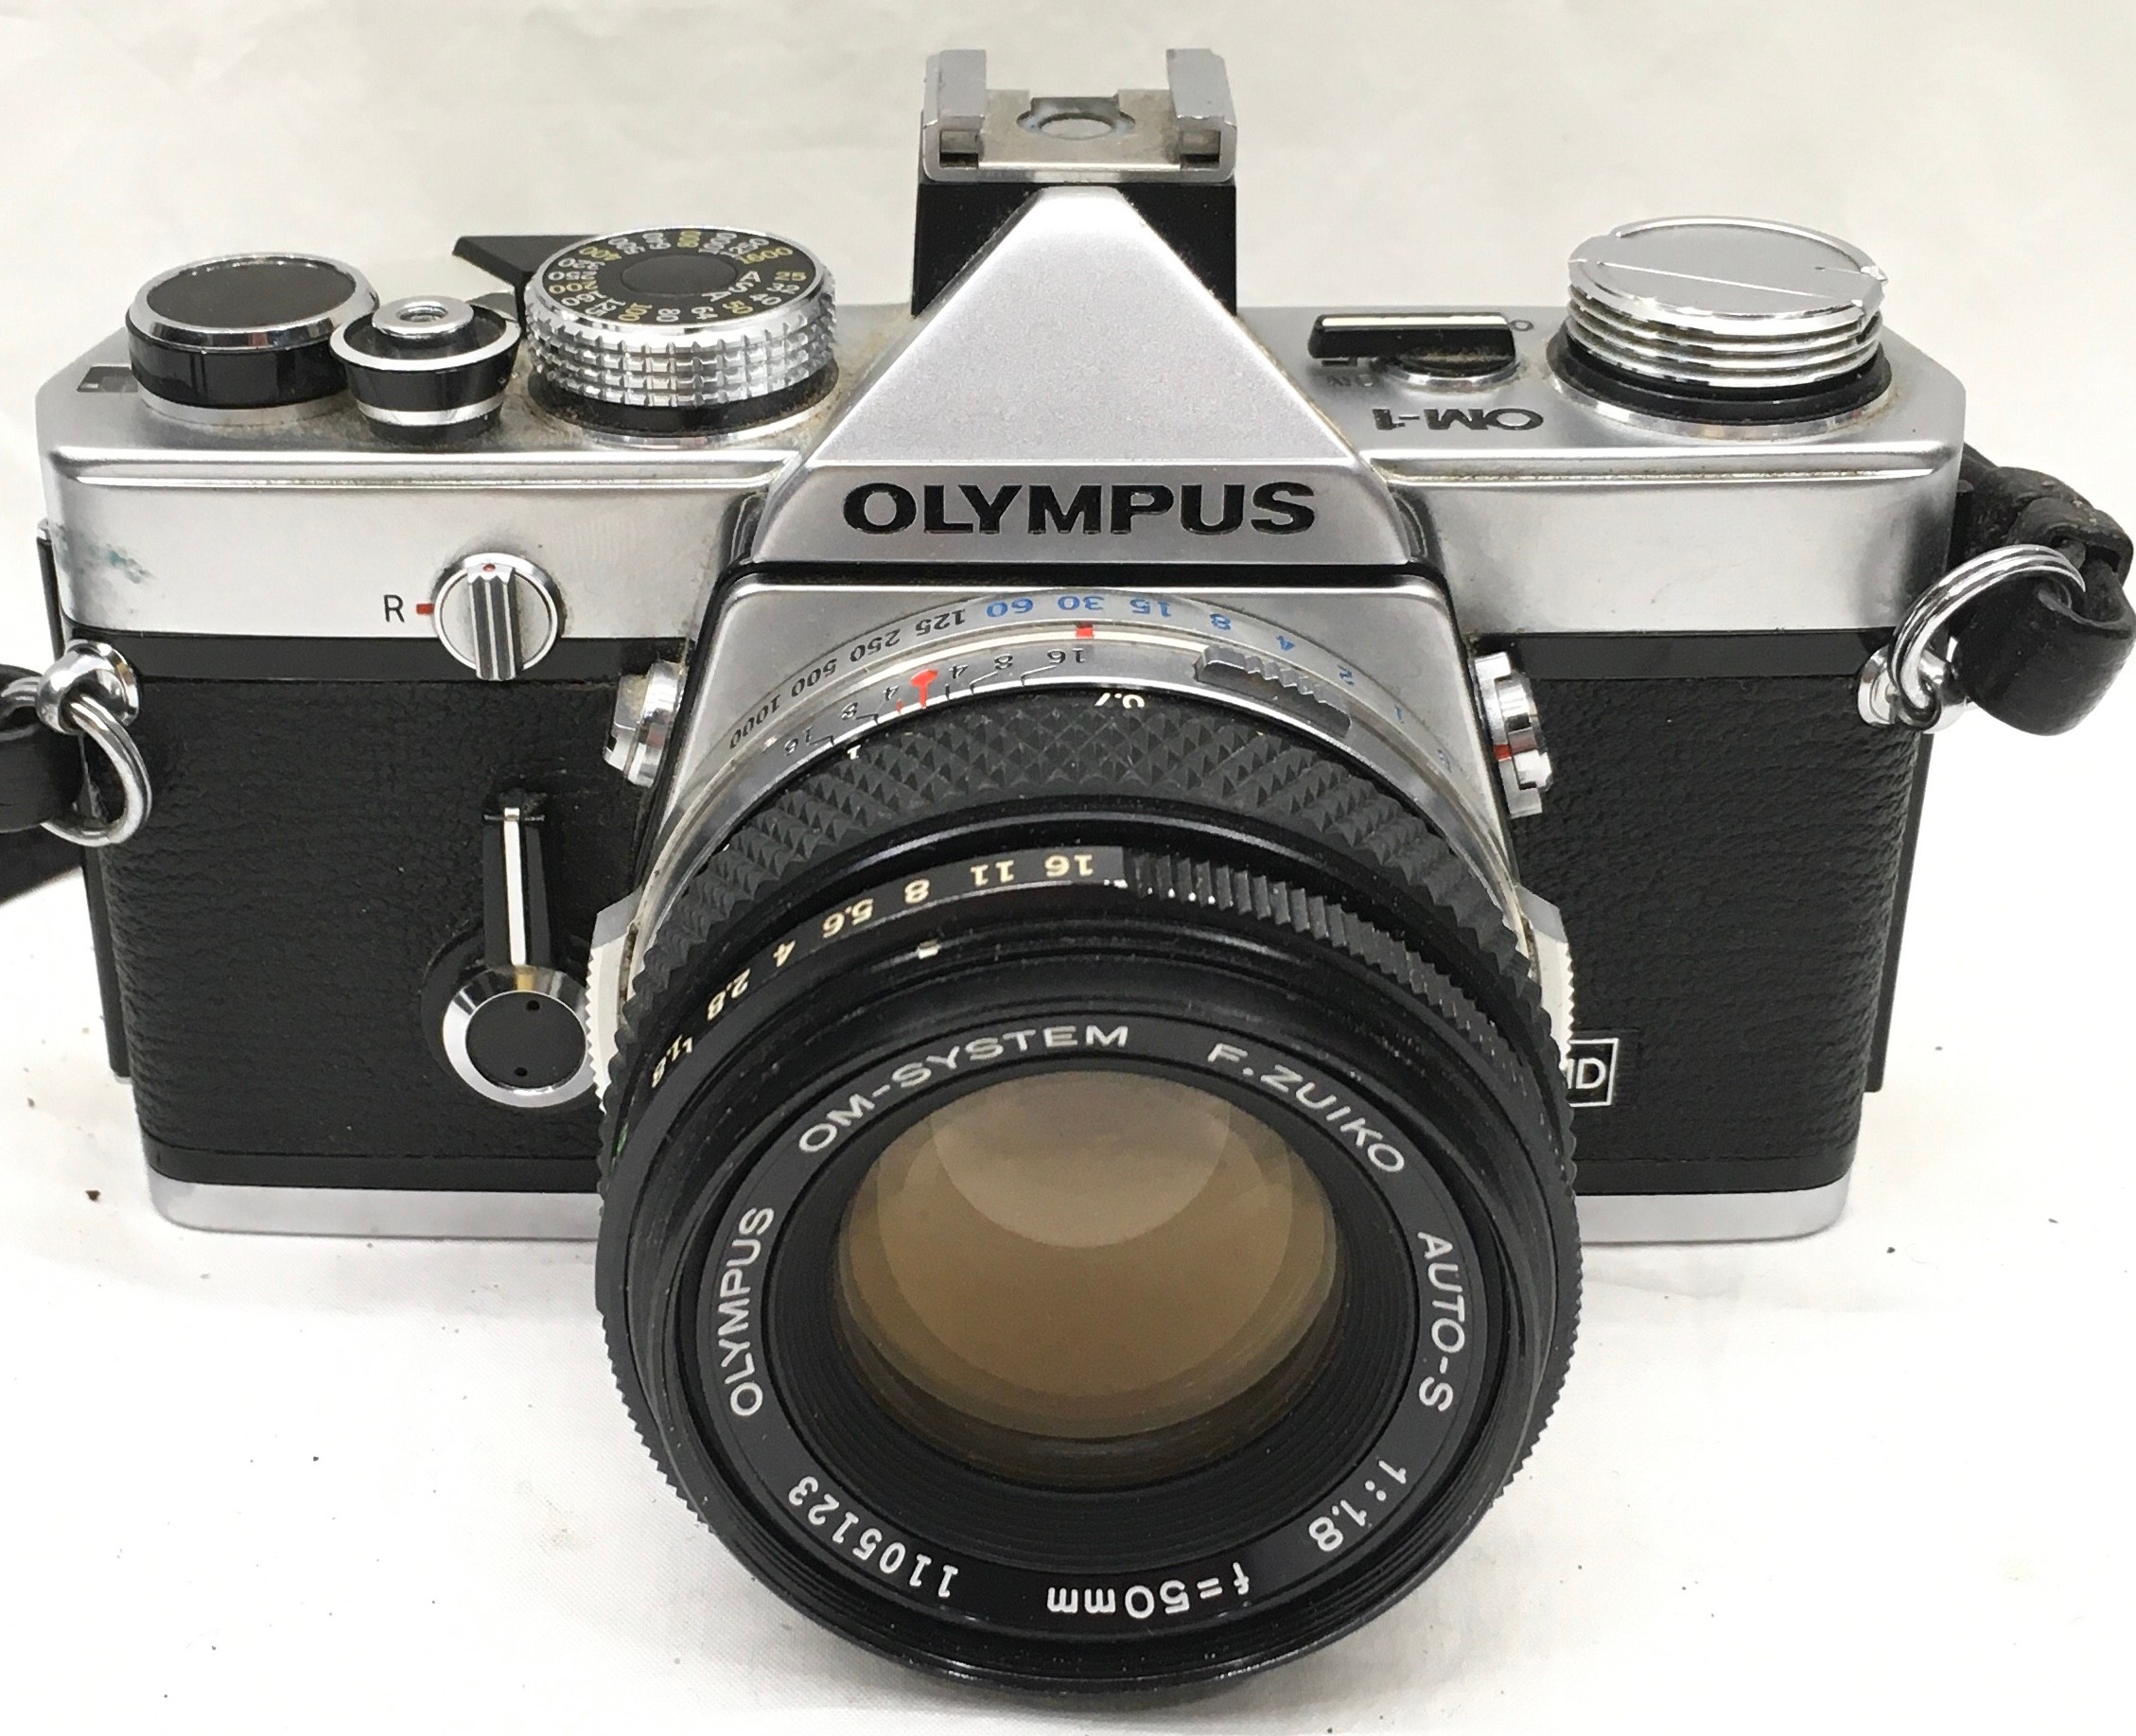 Quality vintage Olympus OM1 35mm SLR camera c/w Olympus 1:1.8 50mm prime lens, Vivitar 1:2.8 28mm - Image 2 of 7